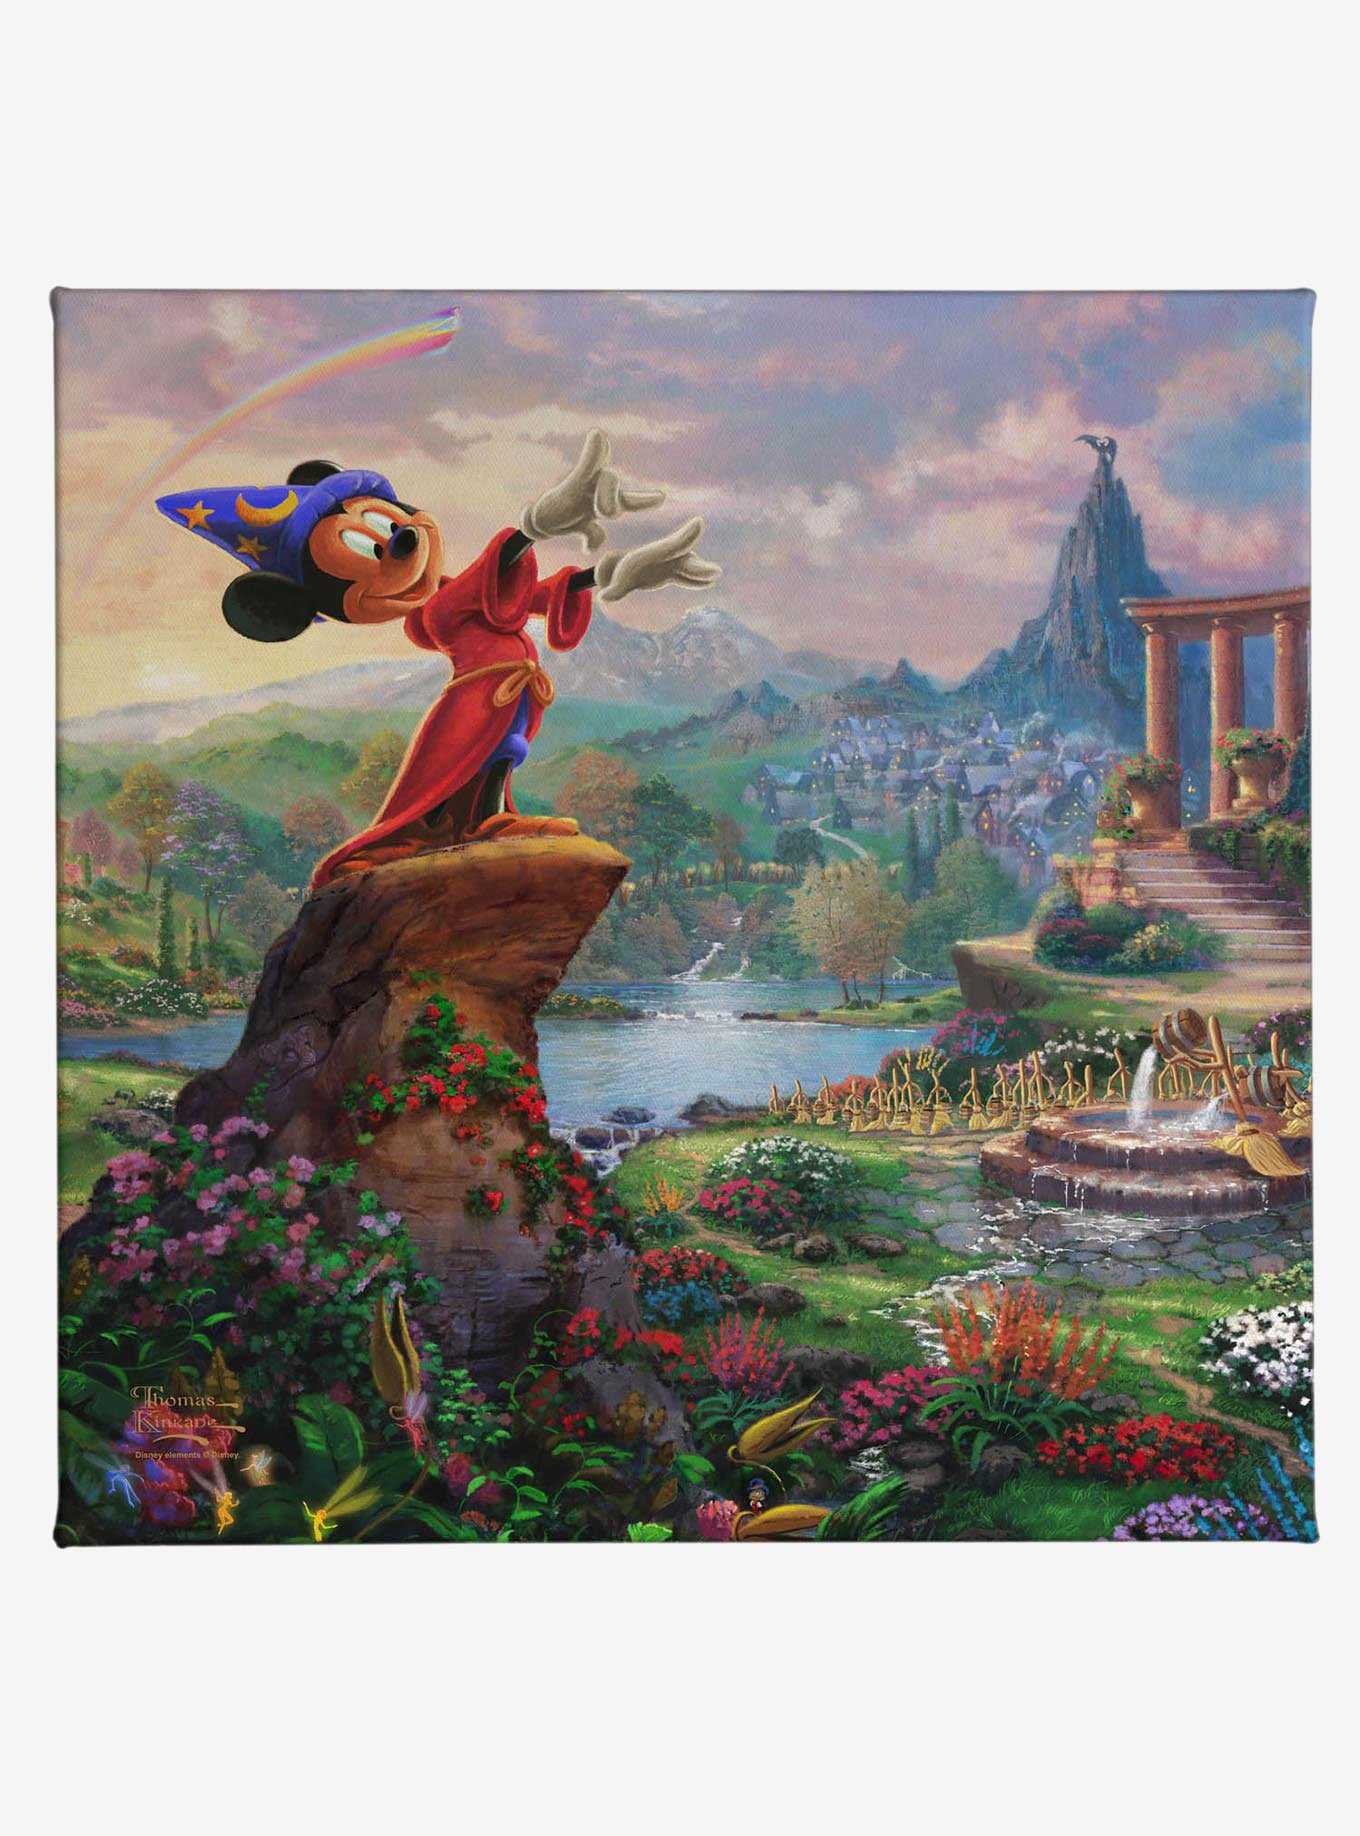 Disney Fantasia Gallery Wrapped Canvas, , hi-res